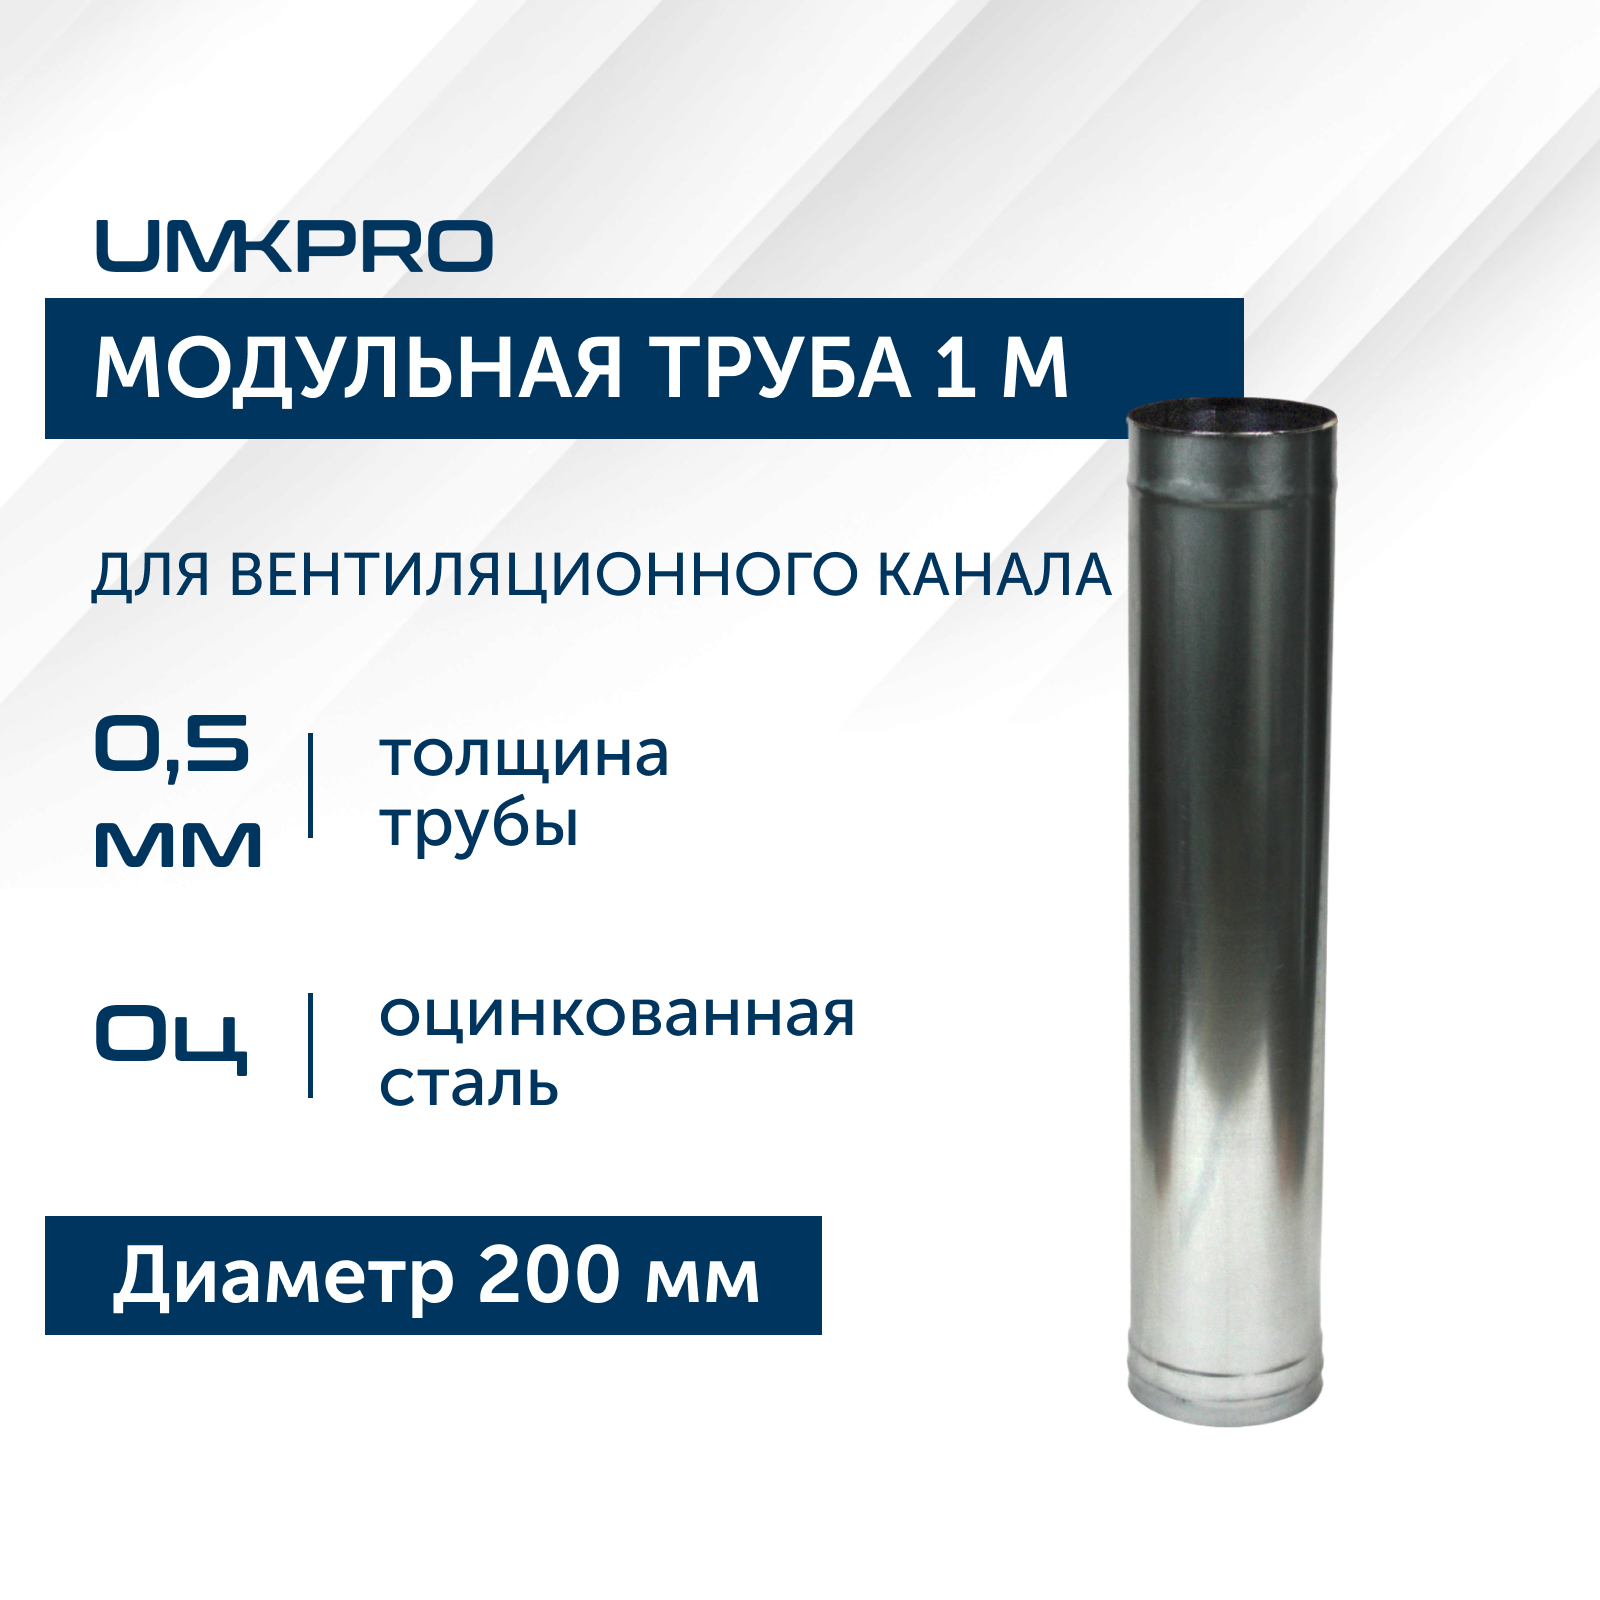 Труба модульная для дымохода 1 м UMKPRO, D 200, Оц/0,5мм модульная прихожая гарун комплектация 6